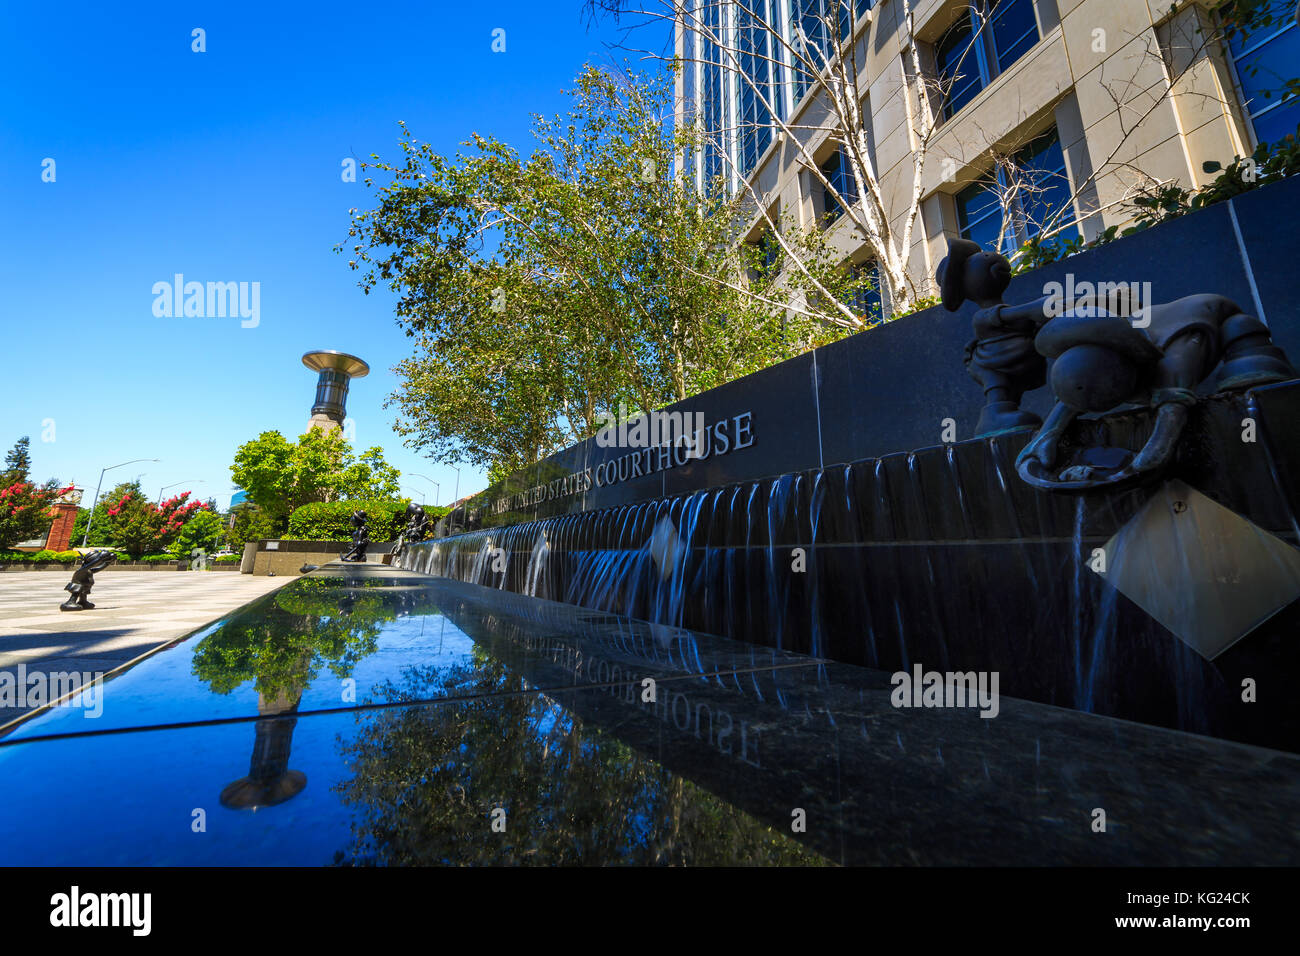 Sacramento Courthouse Water Feature Stock Photo